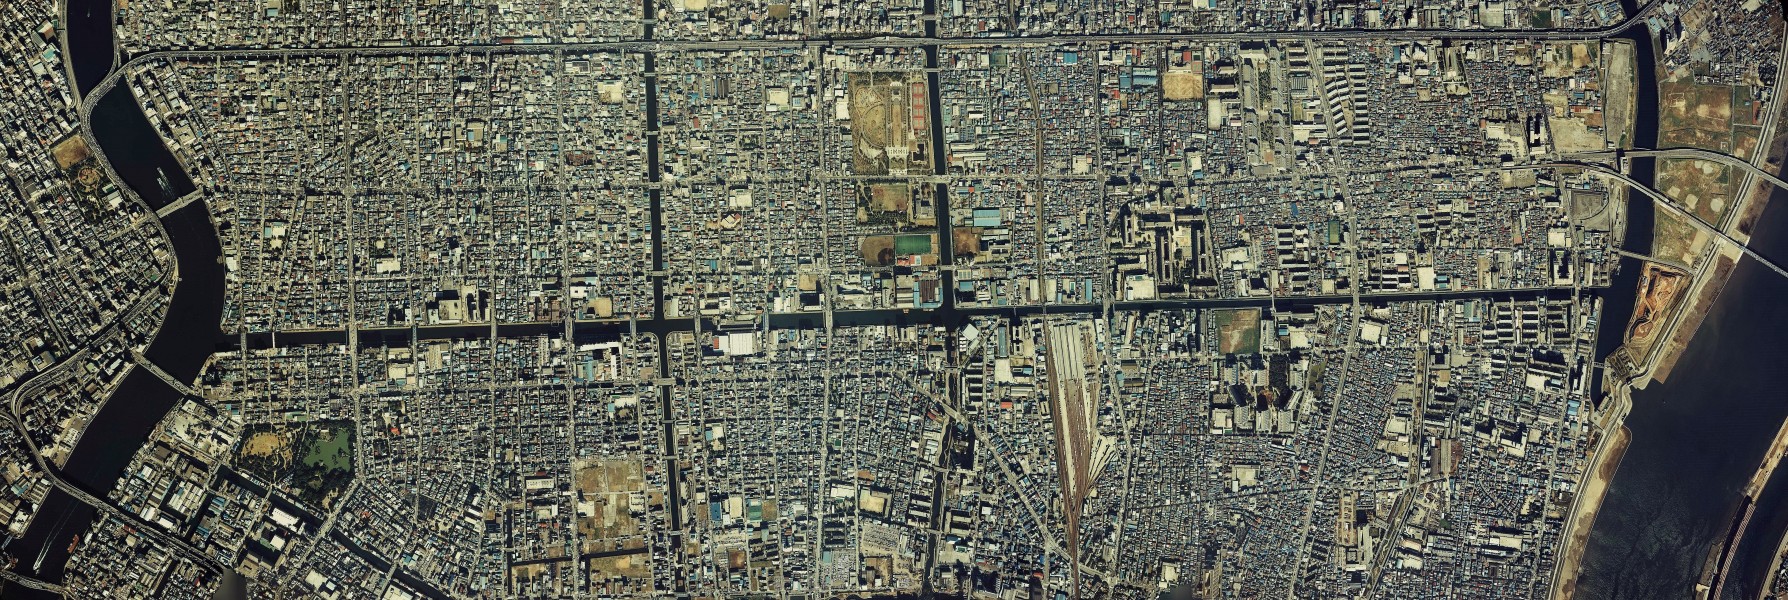 Onagi River Aerial photograph 1984